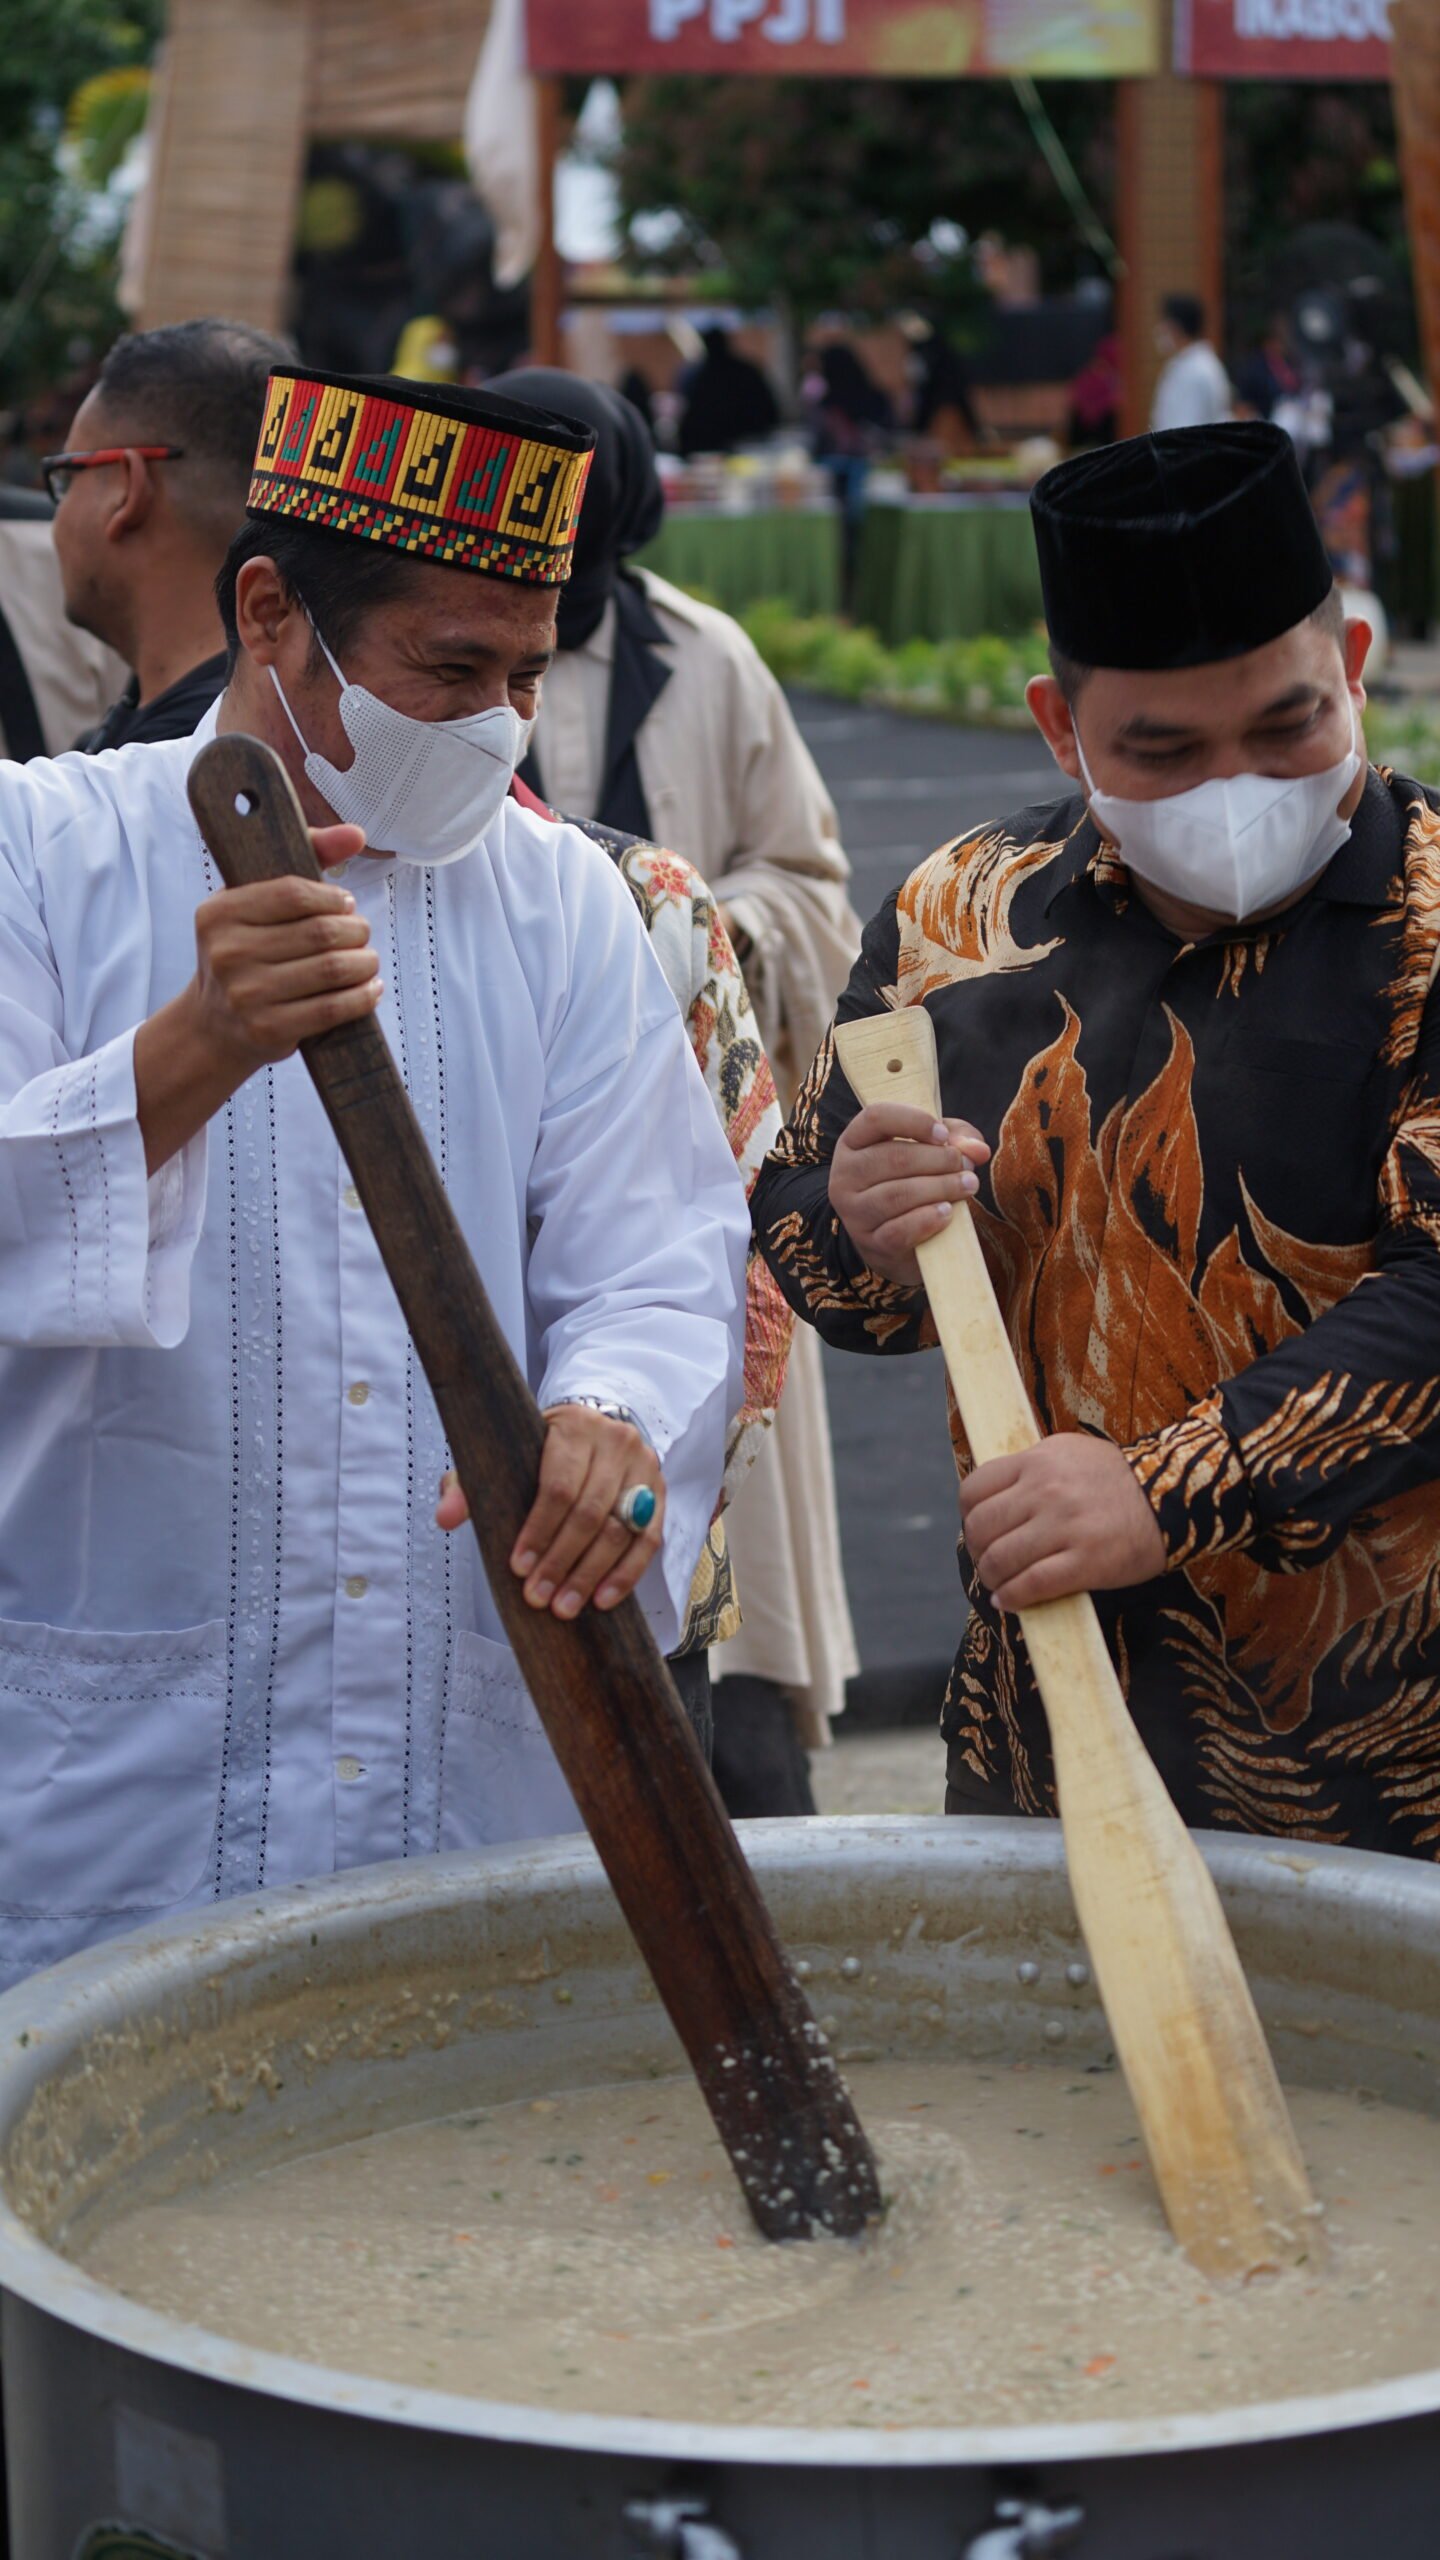 Disbudpar Buka Aceh Ramadhan Festival 2022